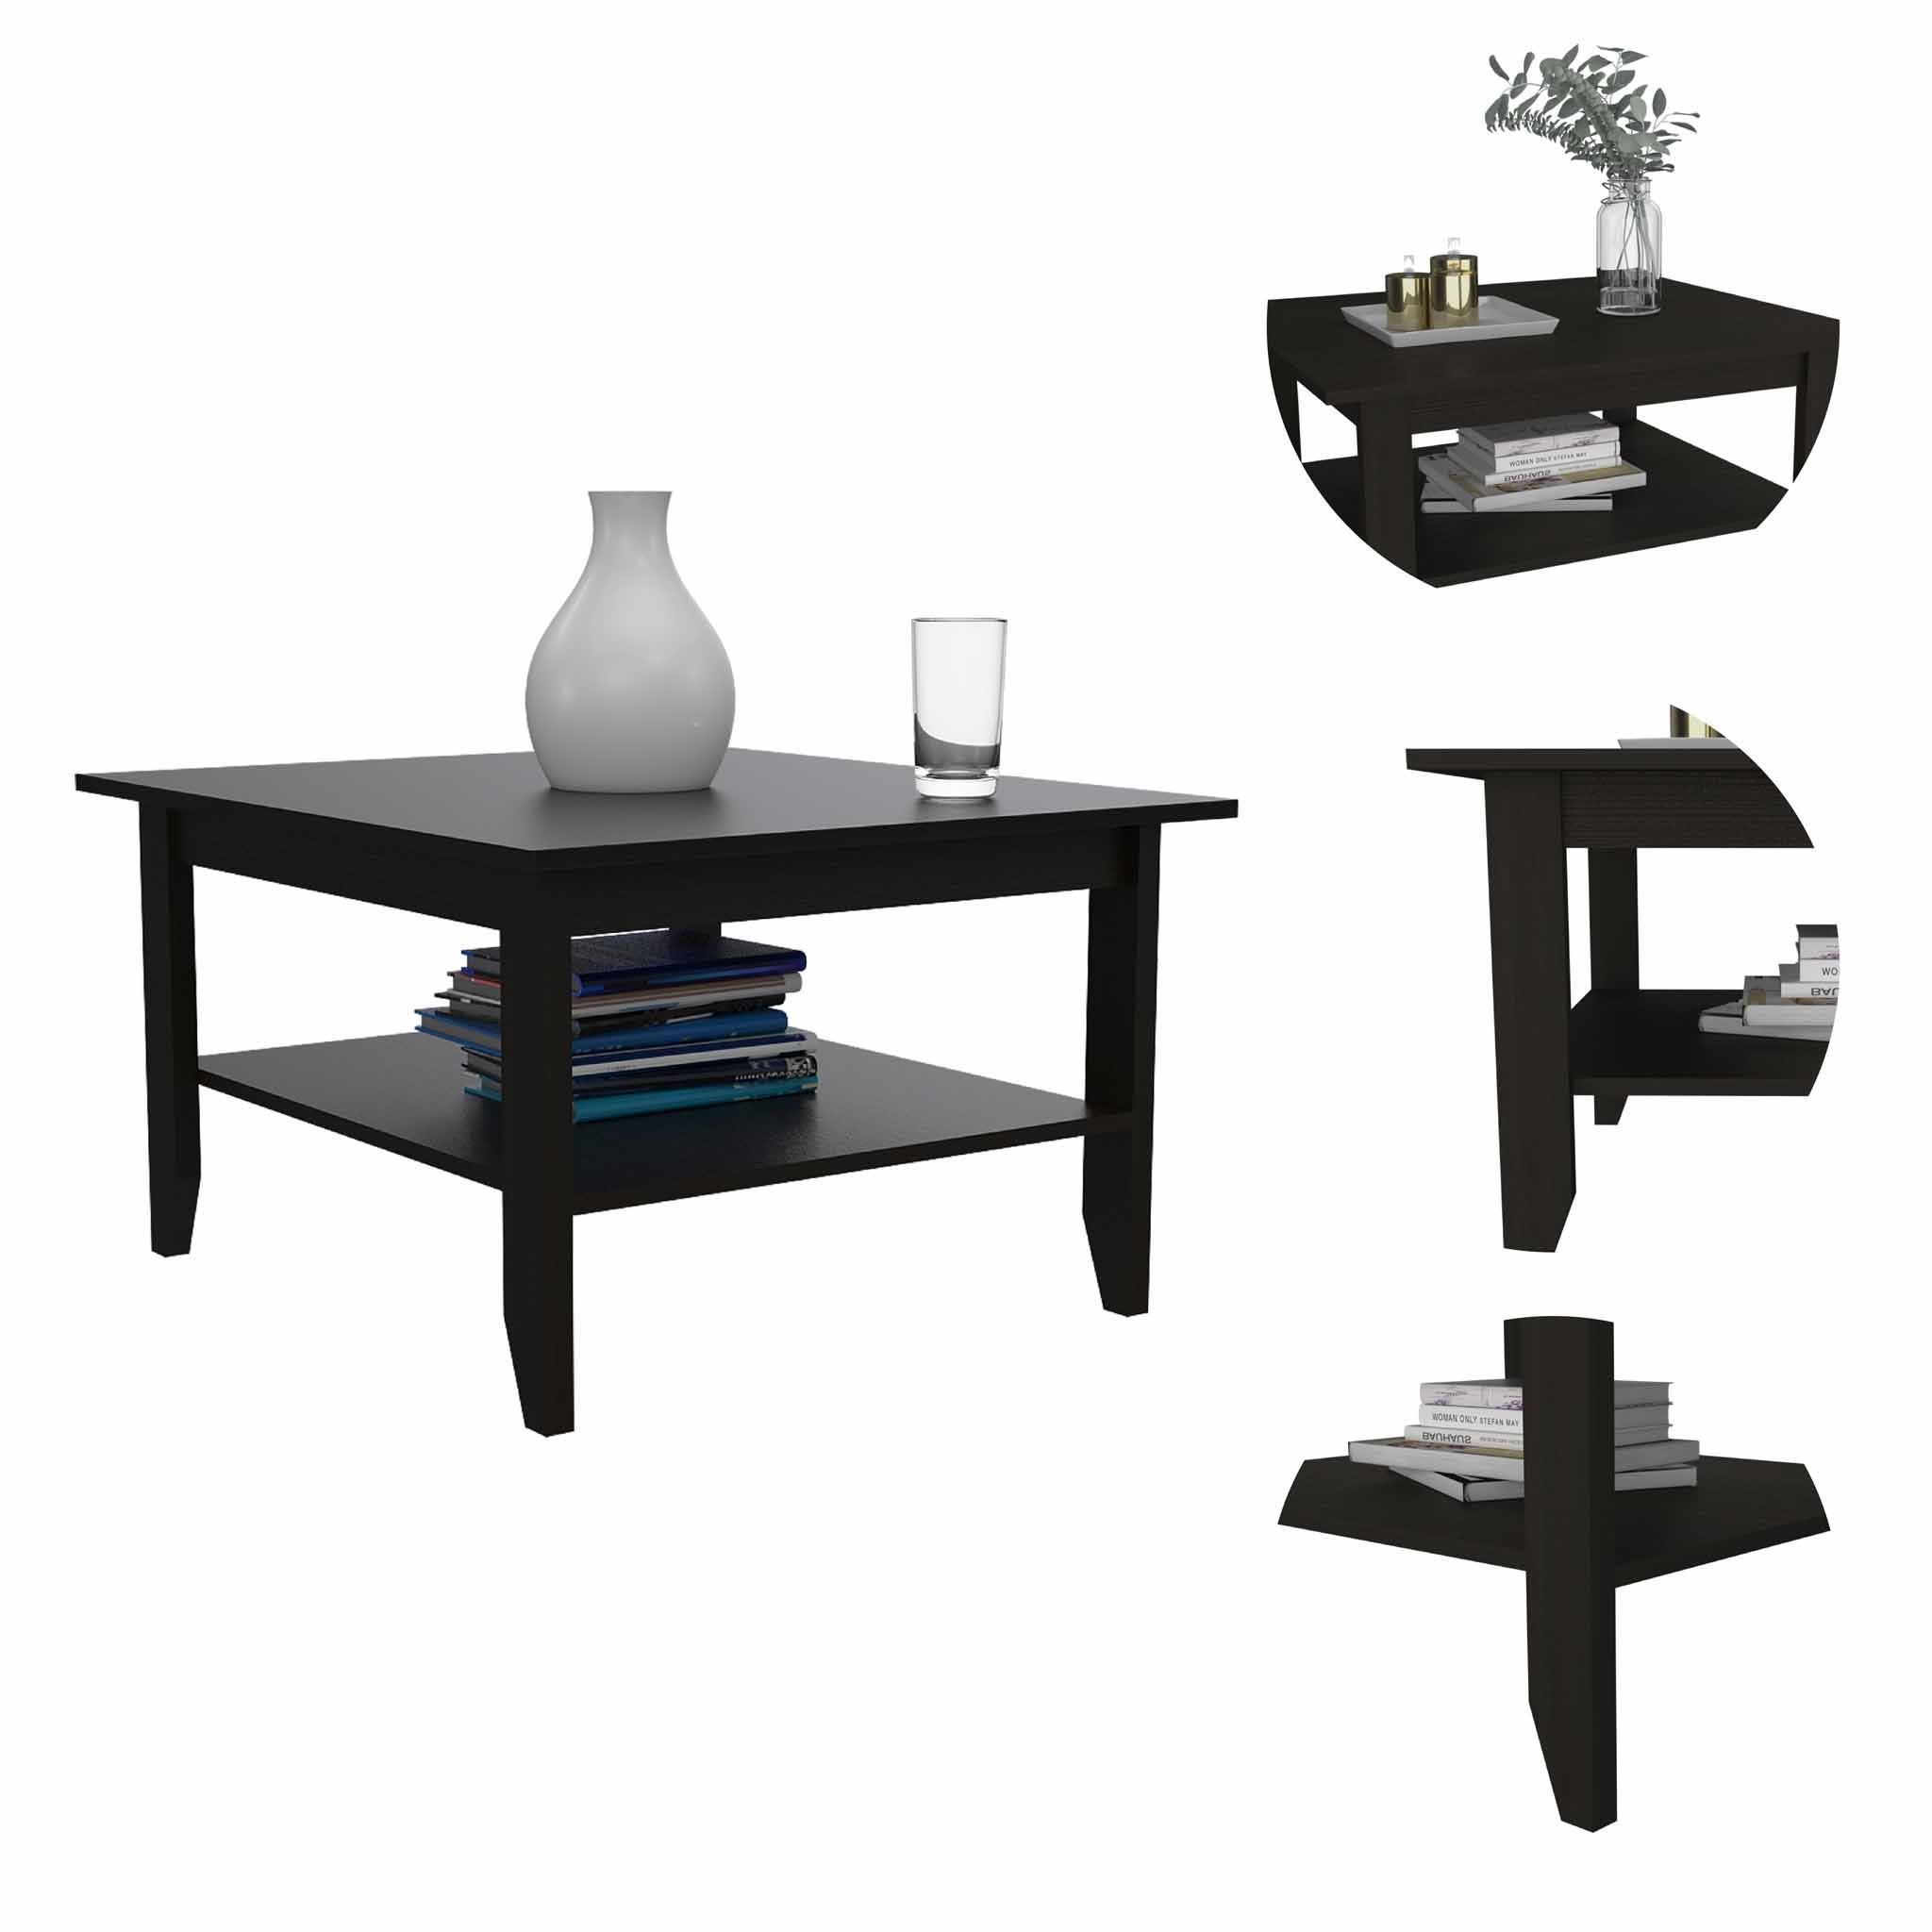 Modern Jet Black Coffee Table with Shelf